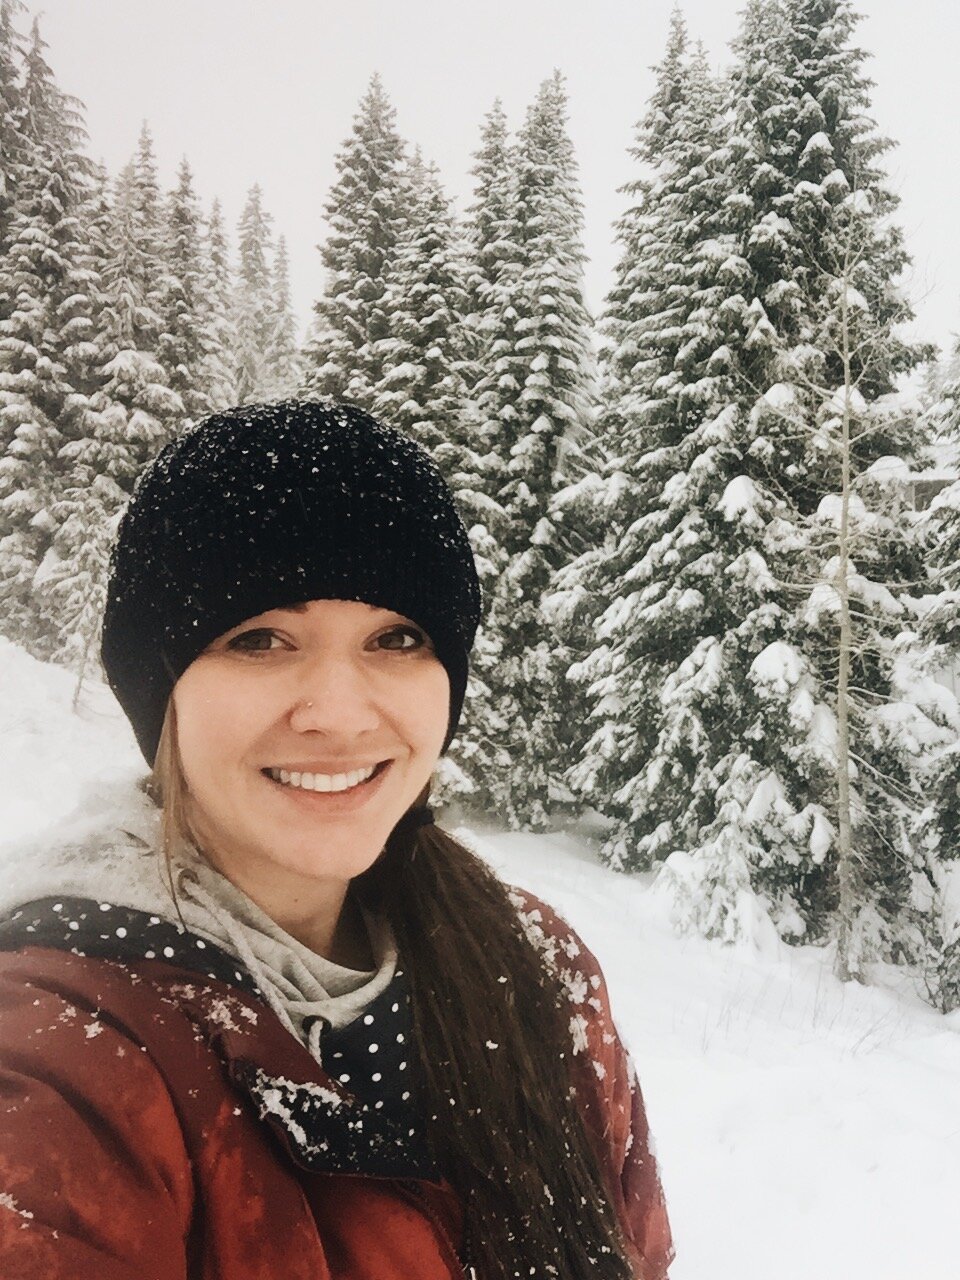  Mount Rainier wedding photographer, Jessi Cavey,&nbsp;enjoys snow in Snoqualmie Pass, Washington. 